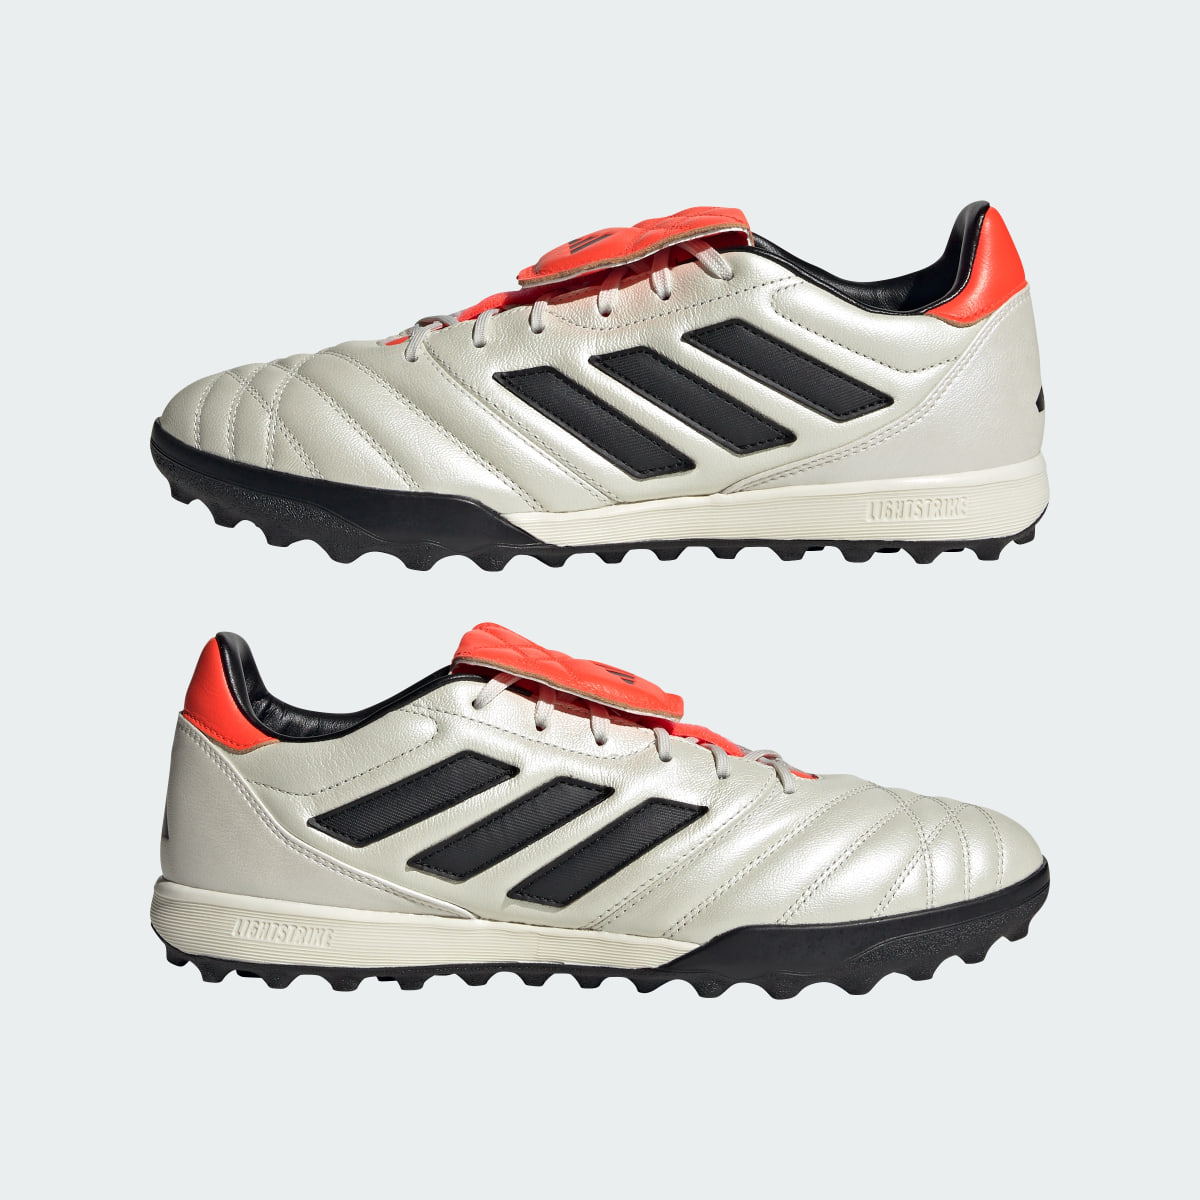 Adidas Copa Gloro Turf Boots. 8